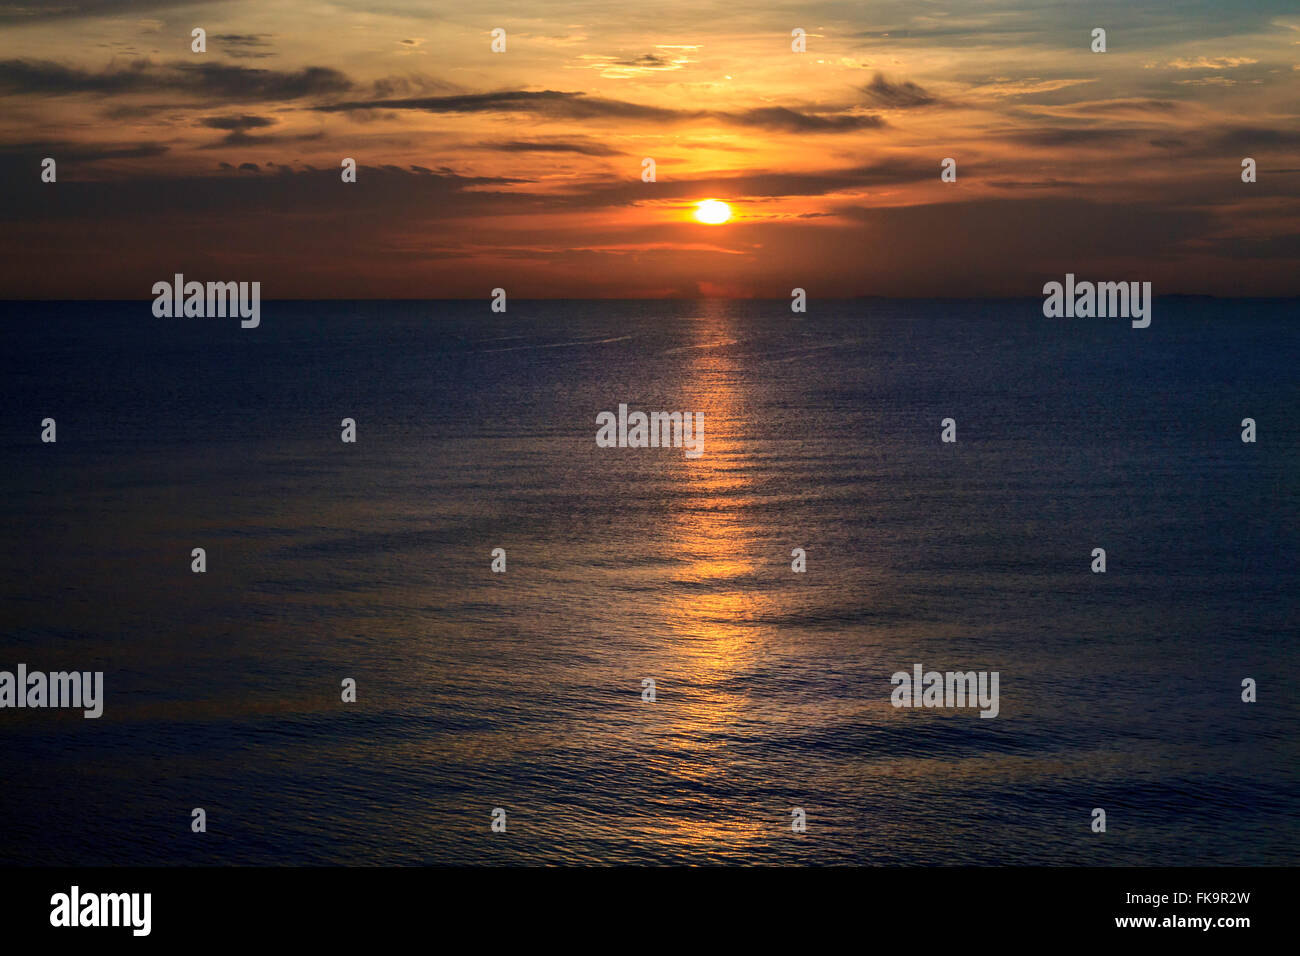 Ocean sunset on the island of Koh Samet, Thailand Stock Photo